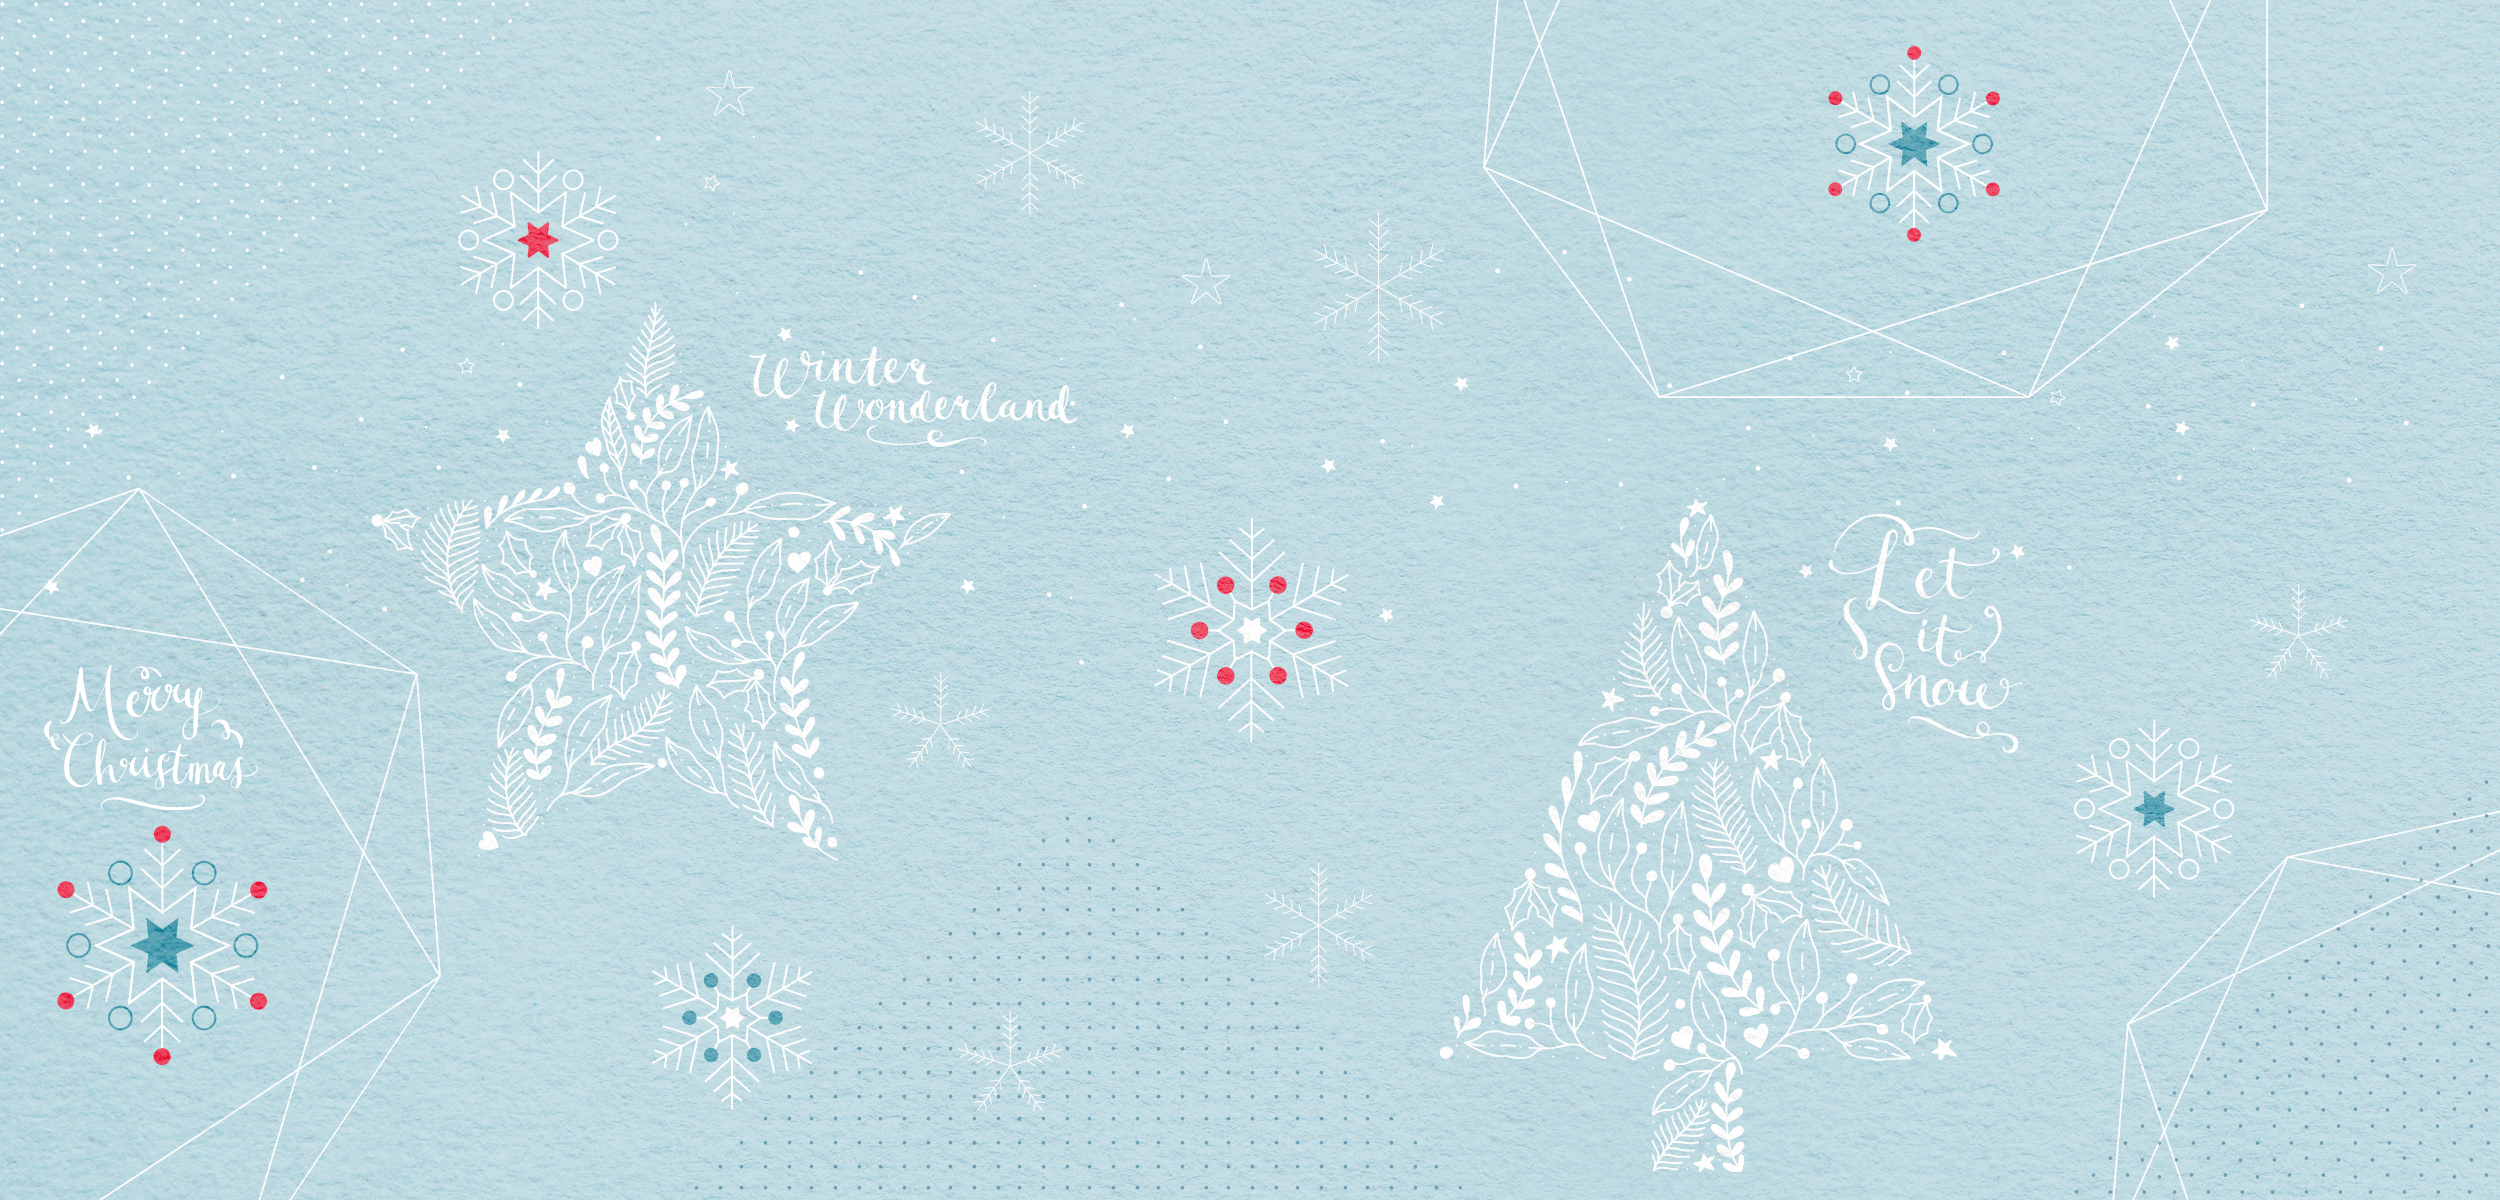 Create a Snowflake in Adobe Illustrator